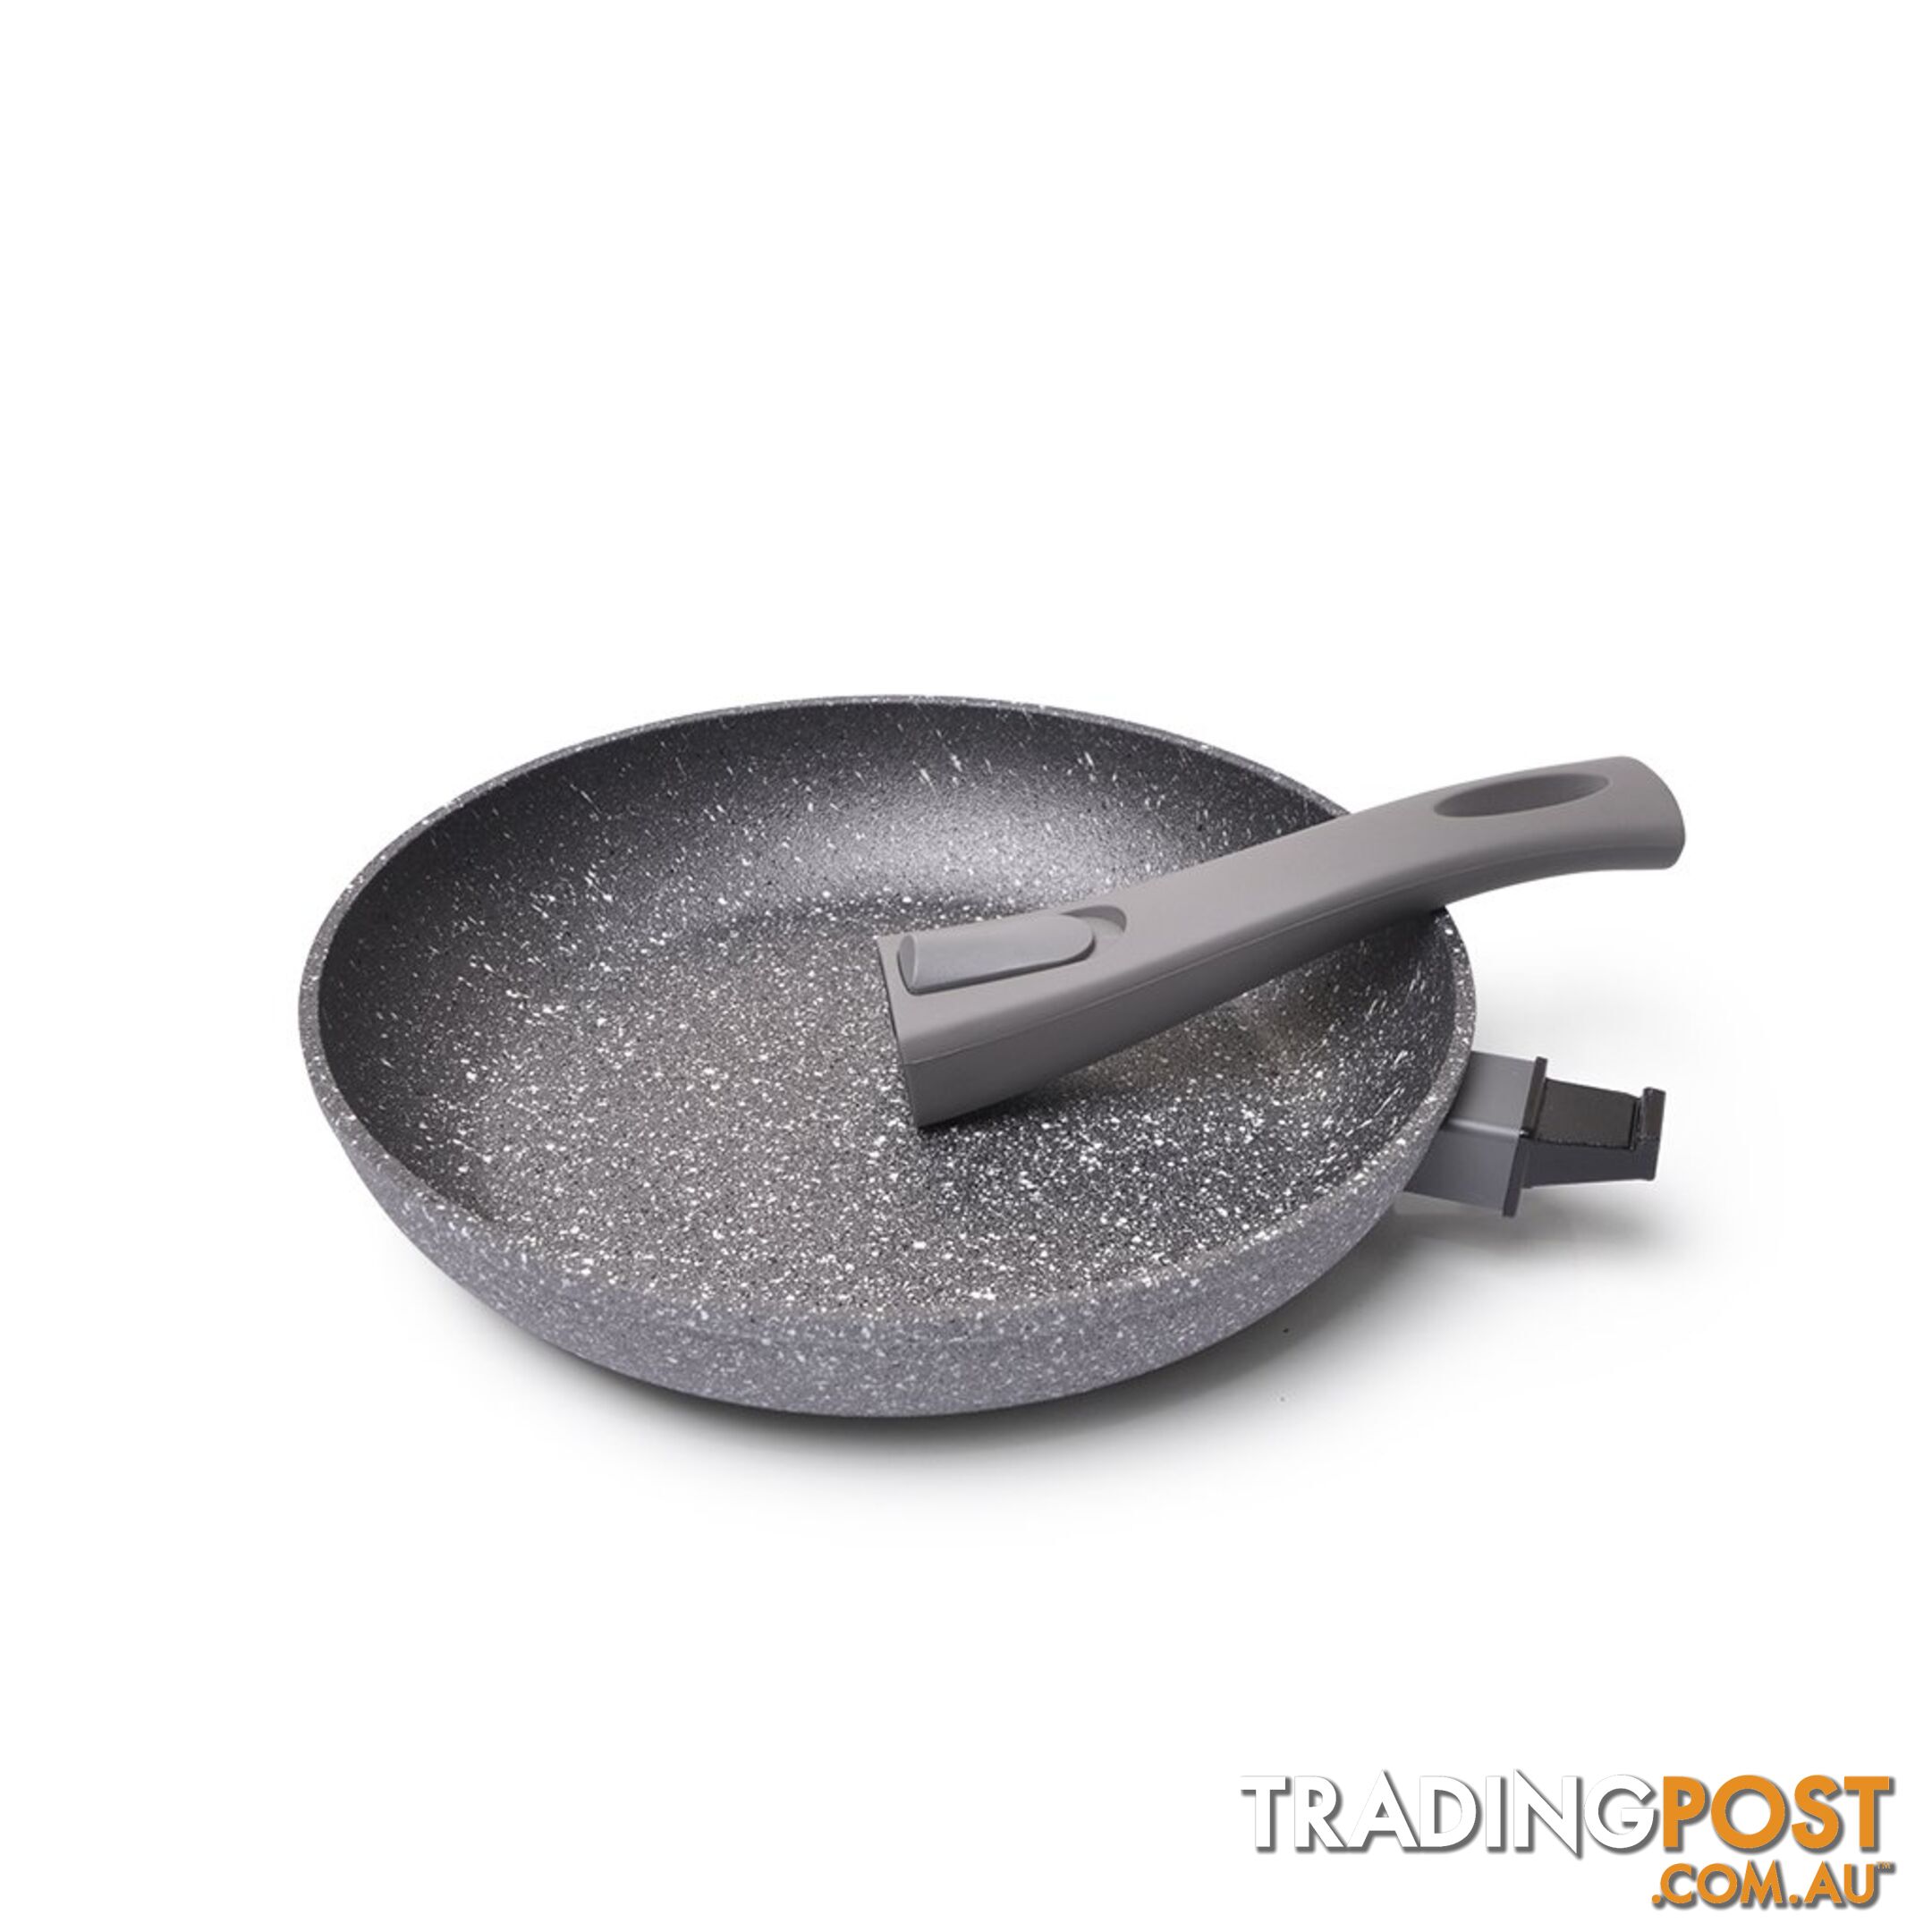 FISSMAN Frying pan ROCK STONE - 20x4.5 cm with detachable handle - 4362